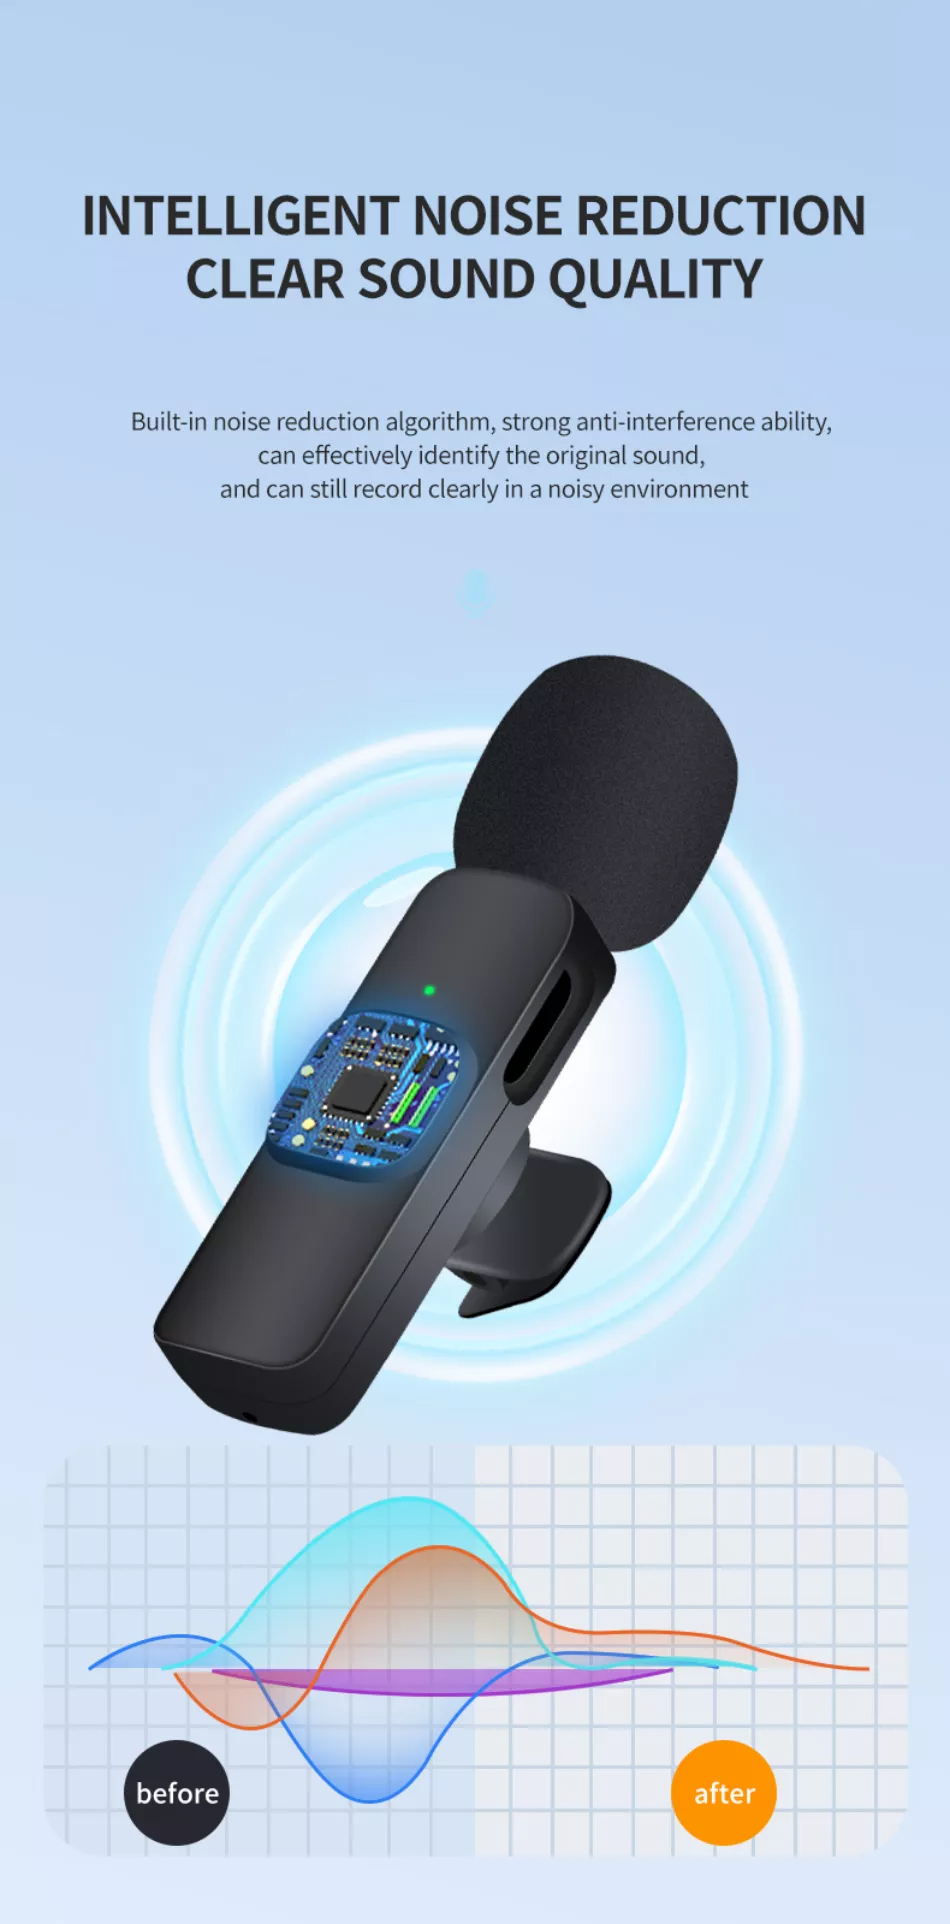 ElectronicsAsk™ K9 Wireless Lavalier Microphone